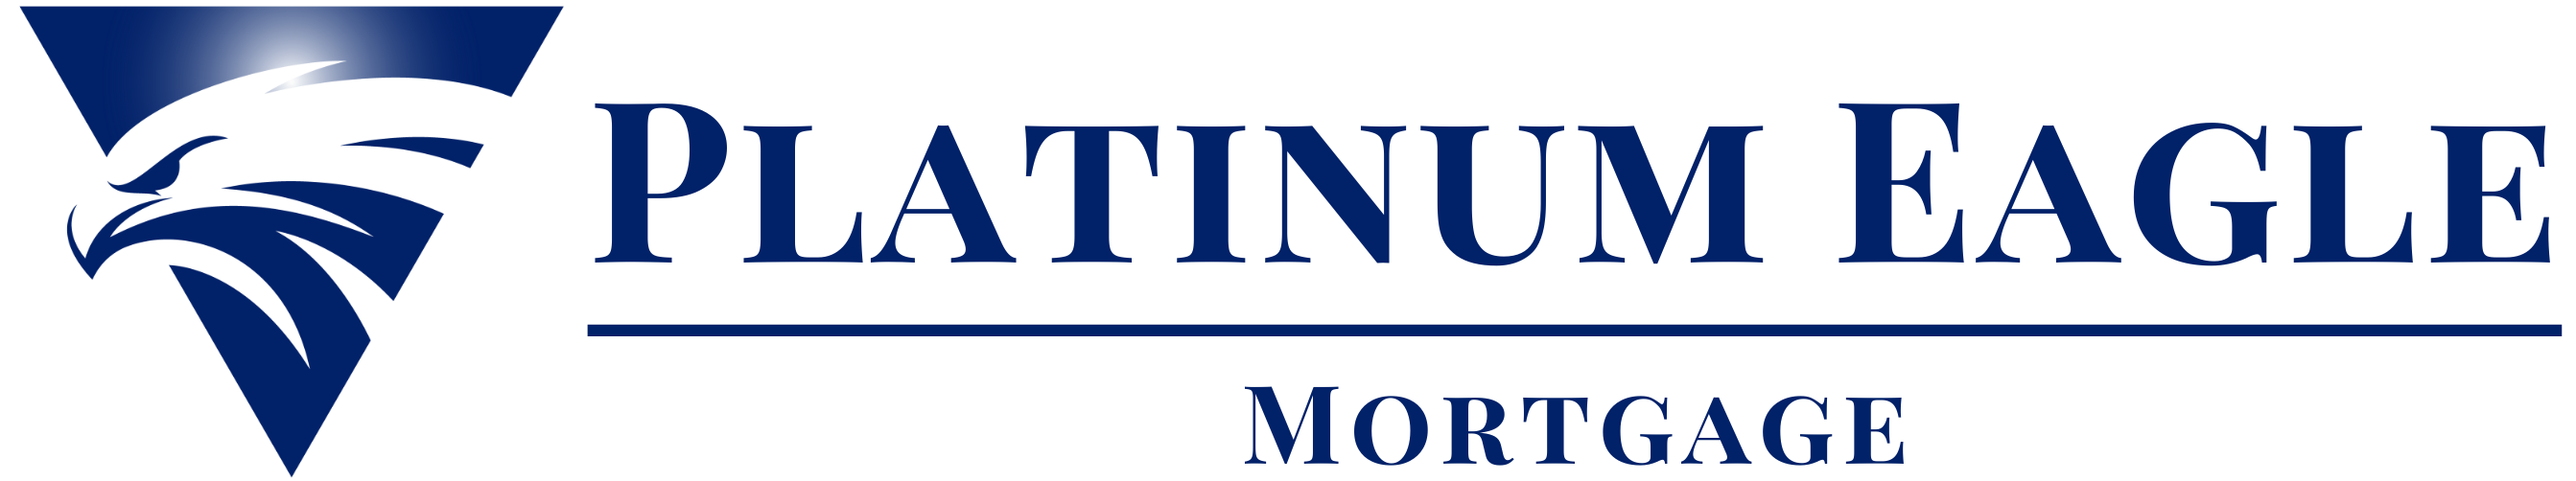 Platinum Eagle Mortgage logo